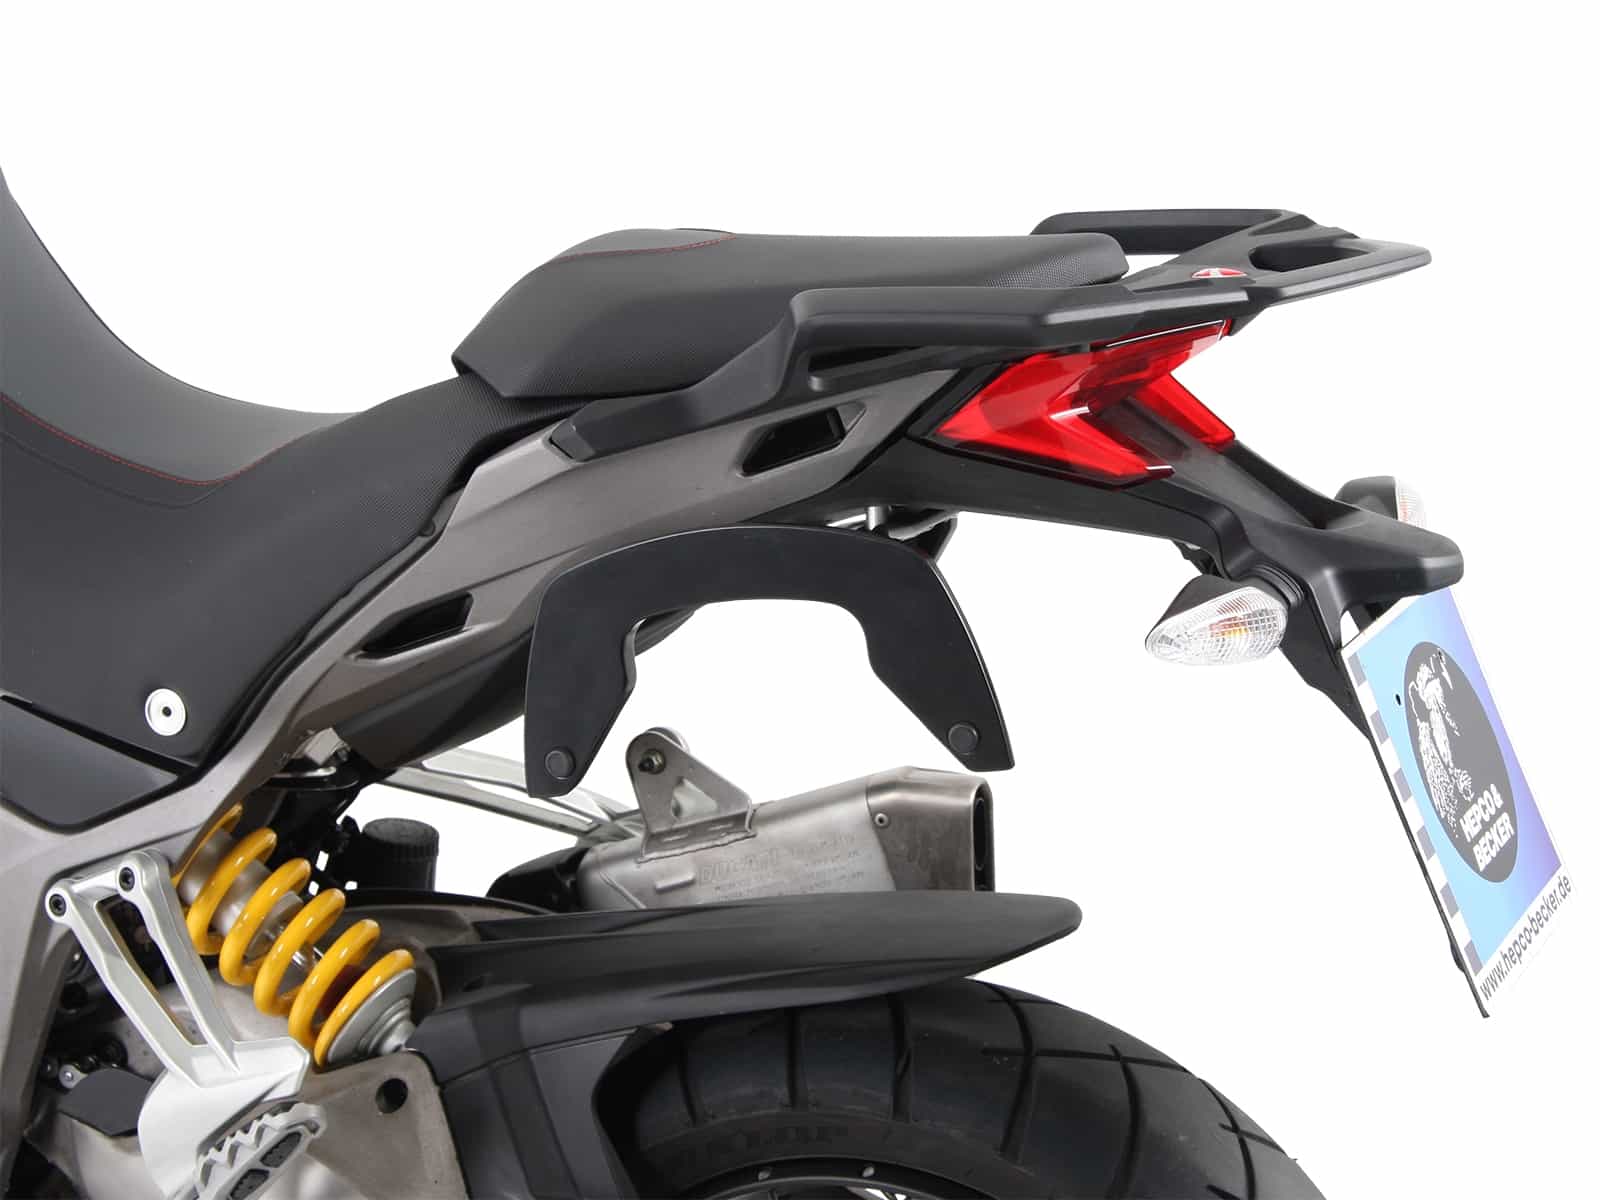 C-Bow sidecarrier for Ducati Multistrada 1260 Enduro (2019-)